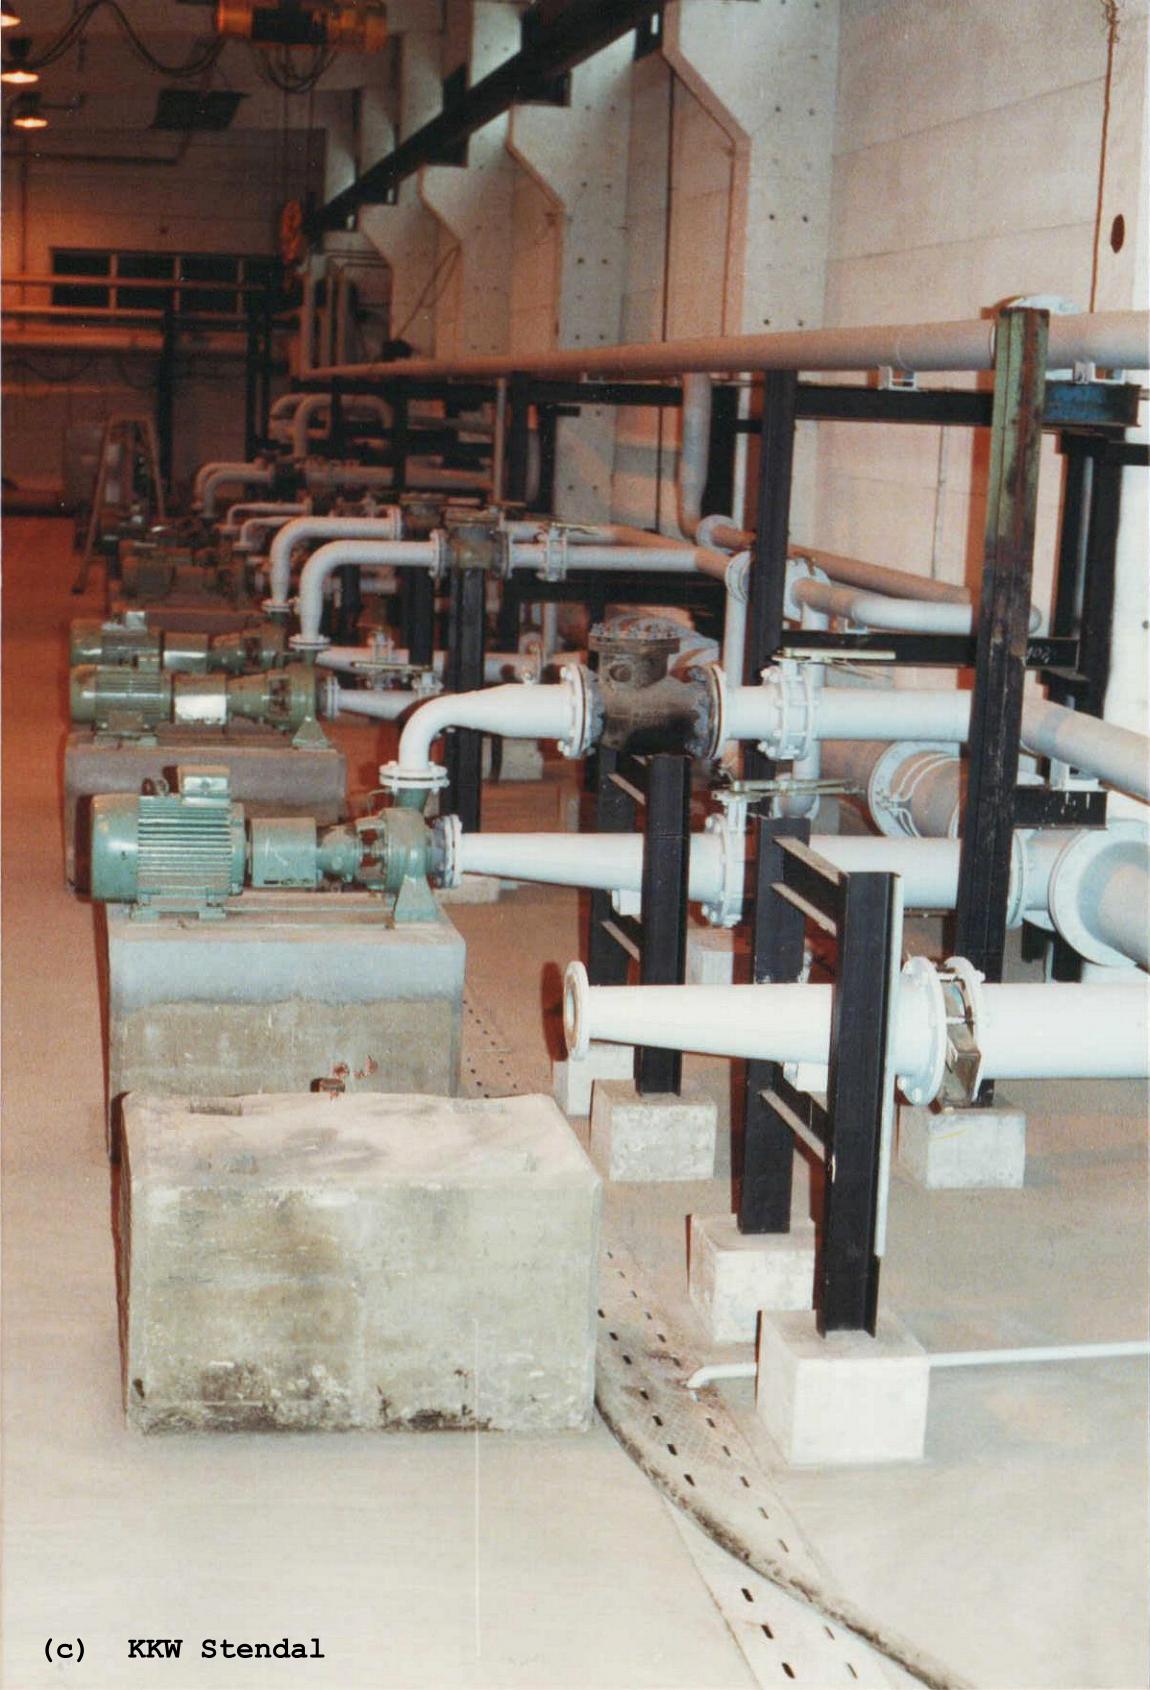  KKW Stendal, Baustelle 1990, Pumpenhalle Vollentsalzung 